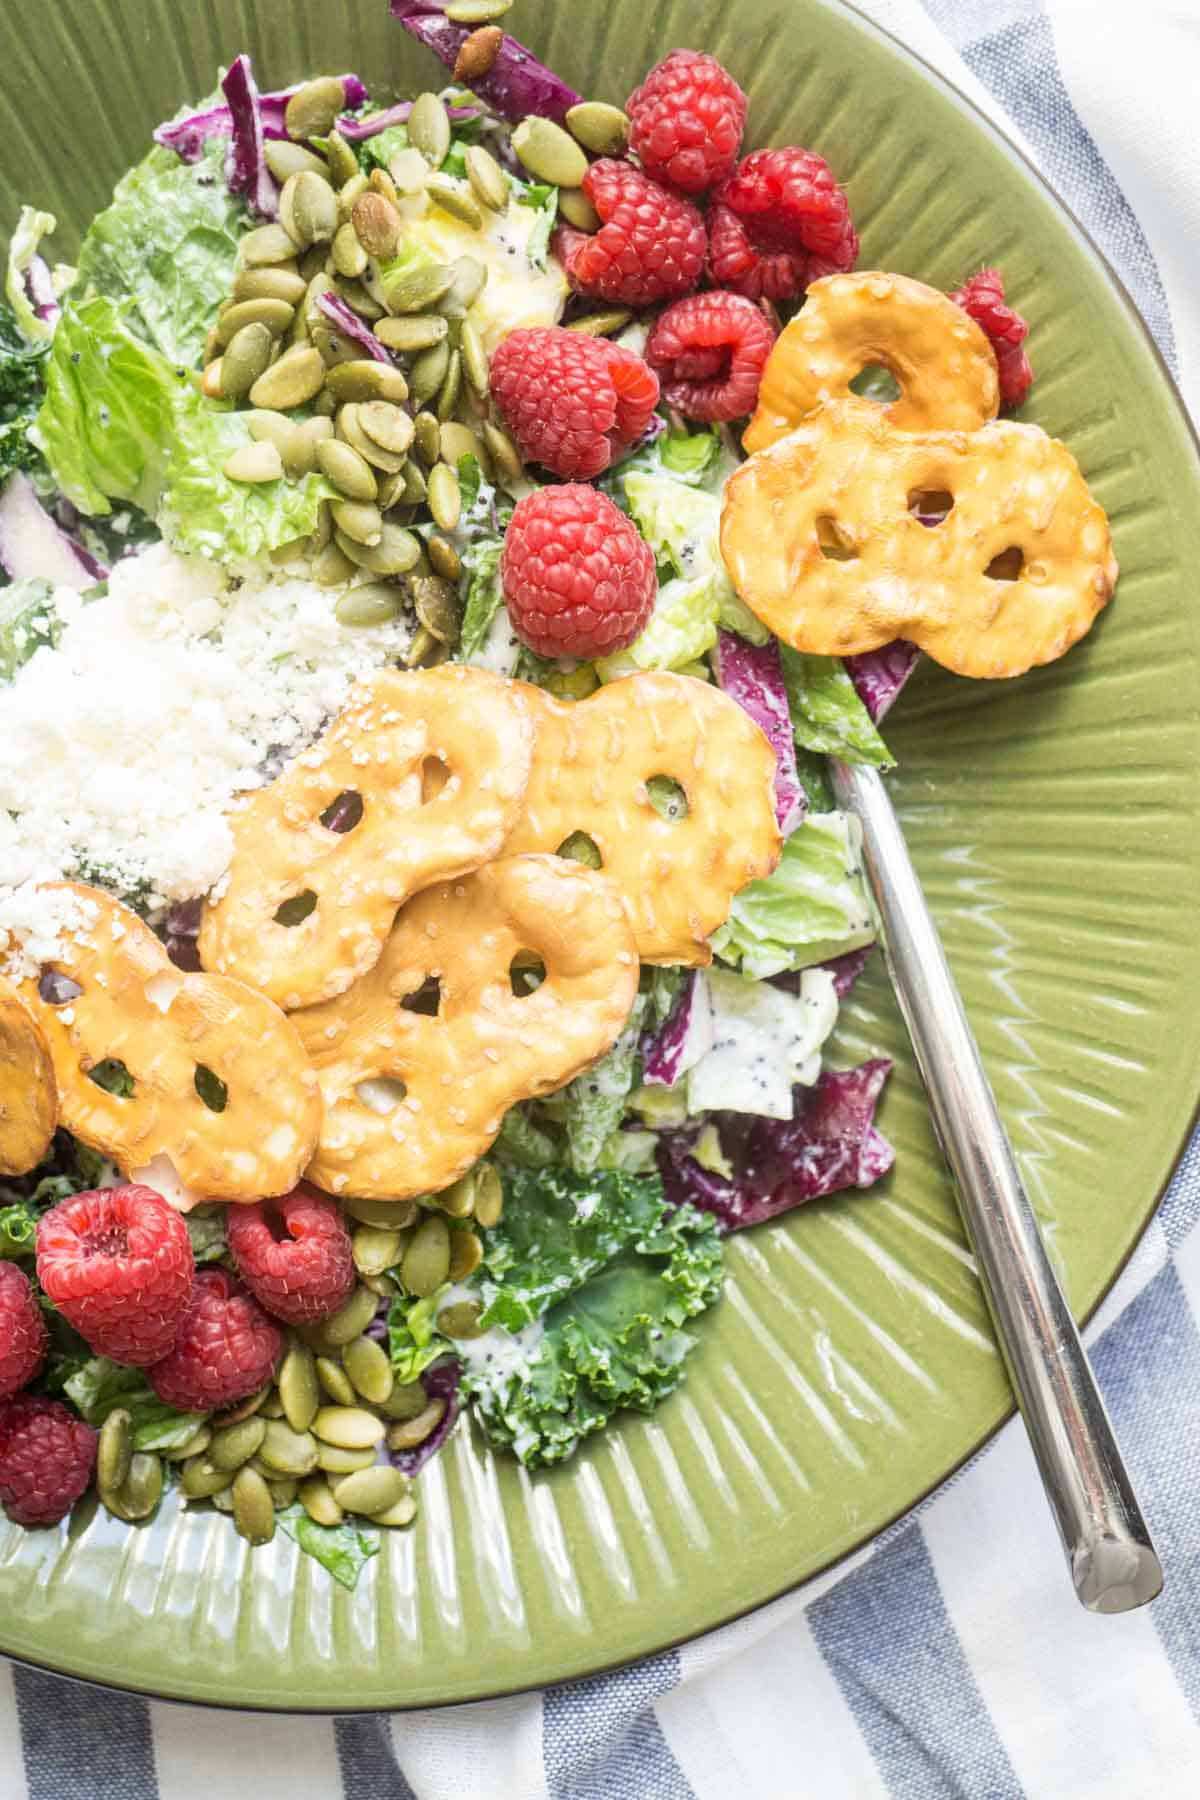 Simple Salad Dressings Recipes
 10 Easy Healthy Salad Dressing Recipes Smart Nutrition